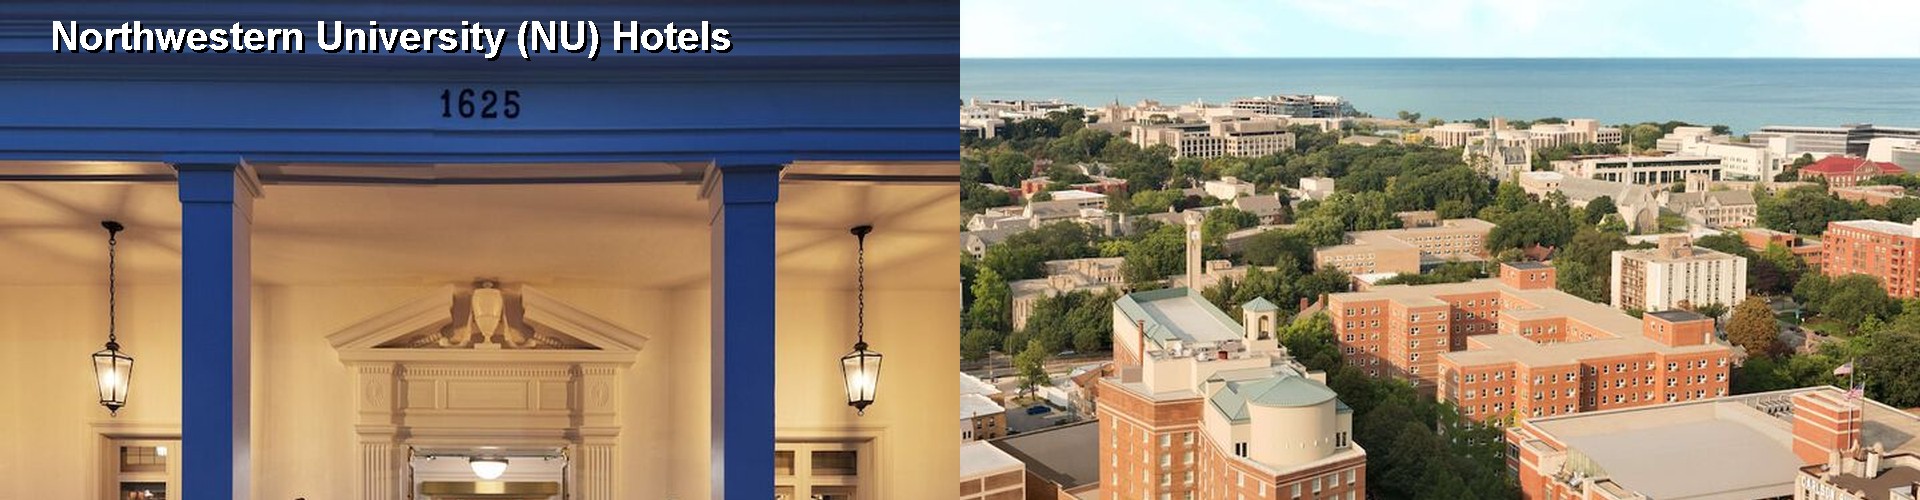 5 Best Hotels near Northwestern University (NU)